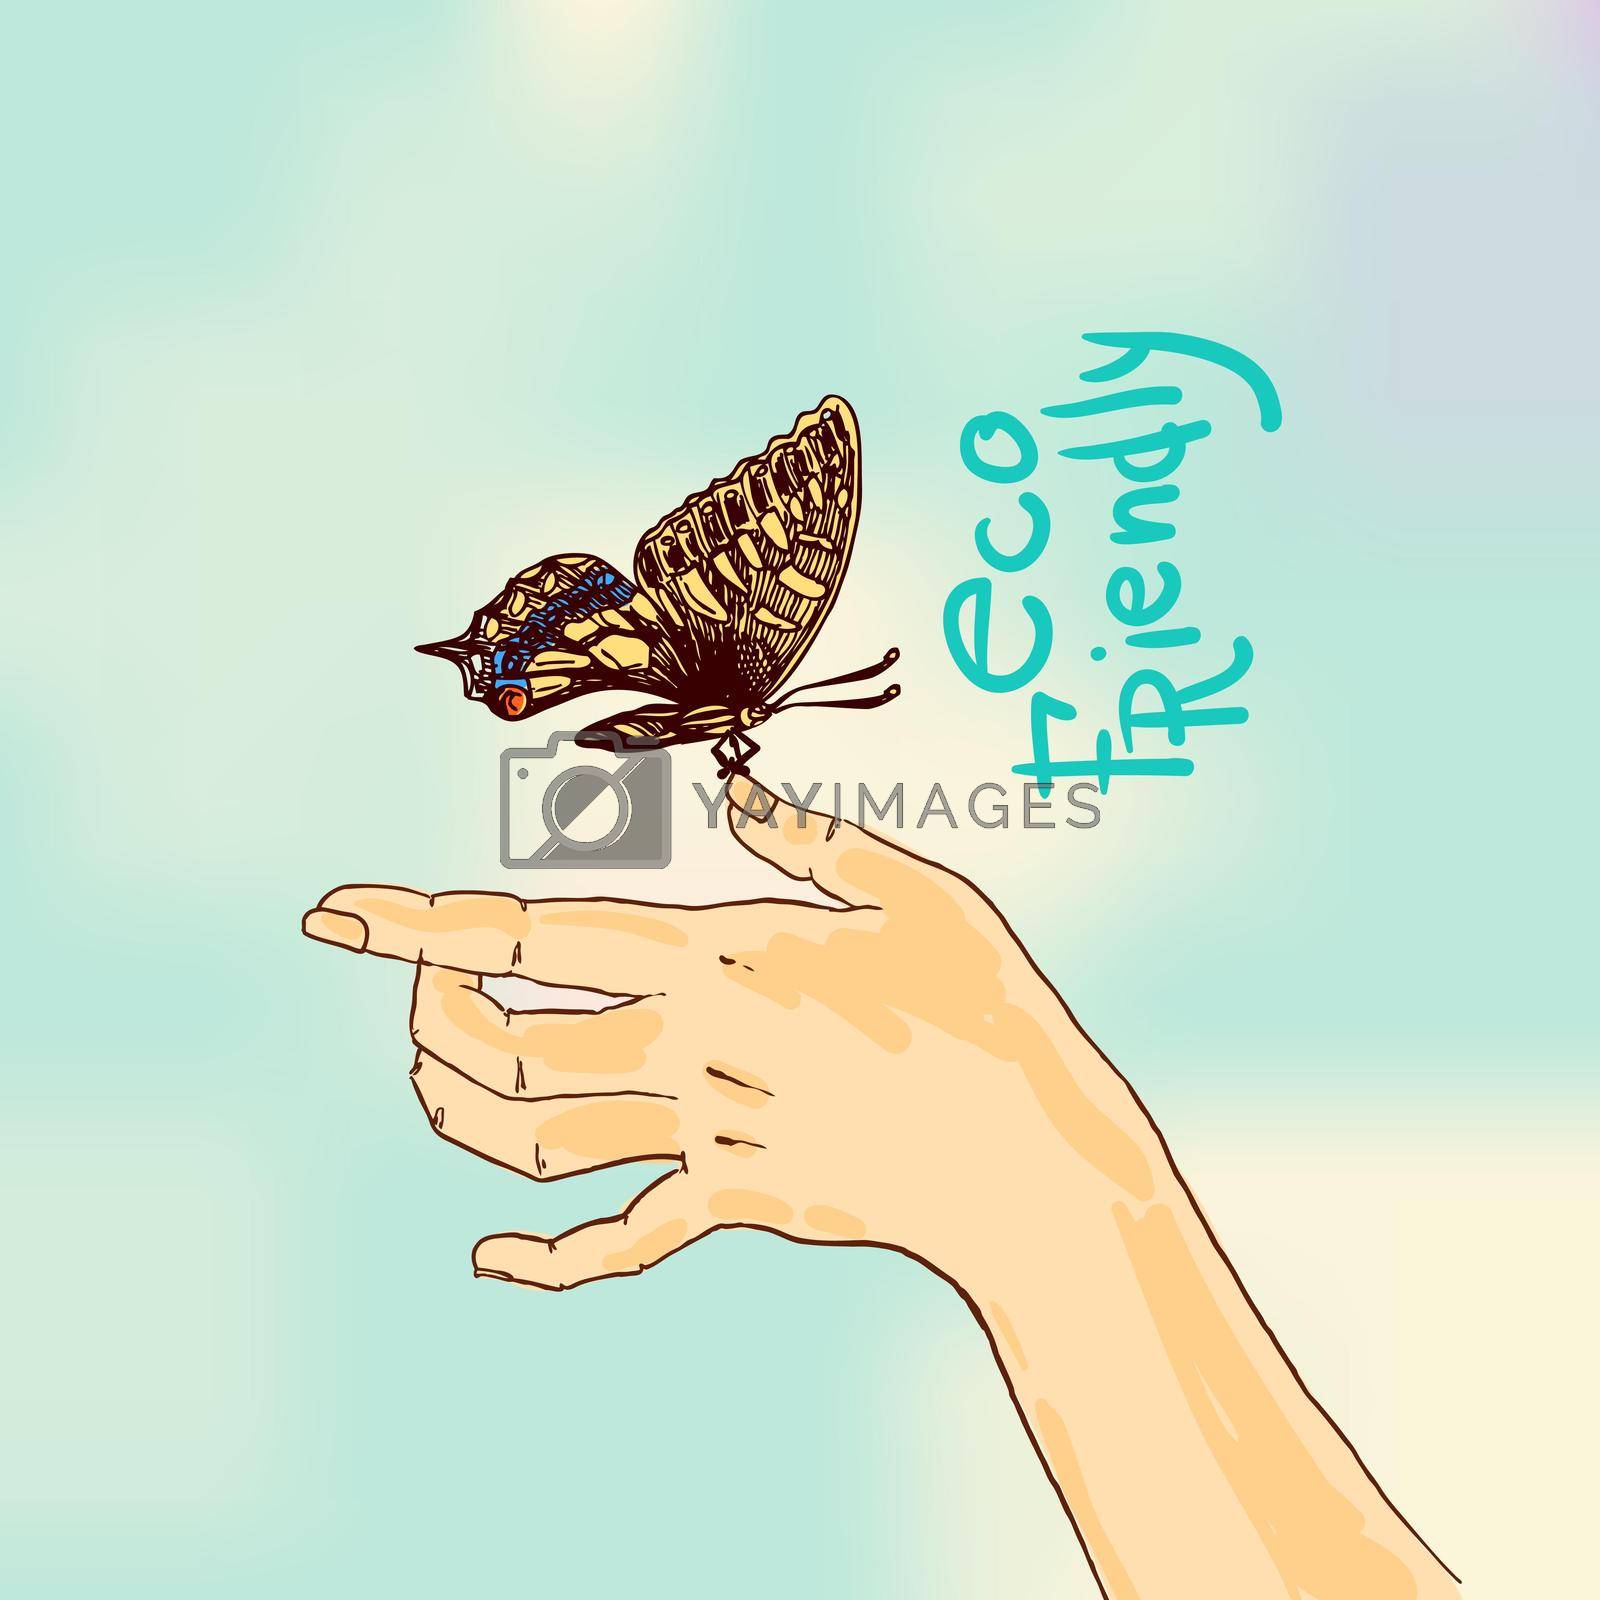 Royalty free image of butterfly sketch eco friendly by steshnikova